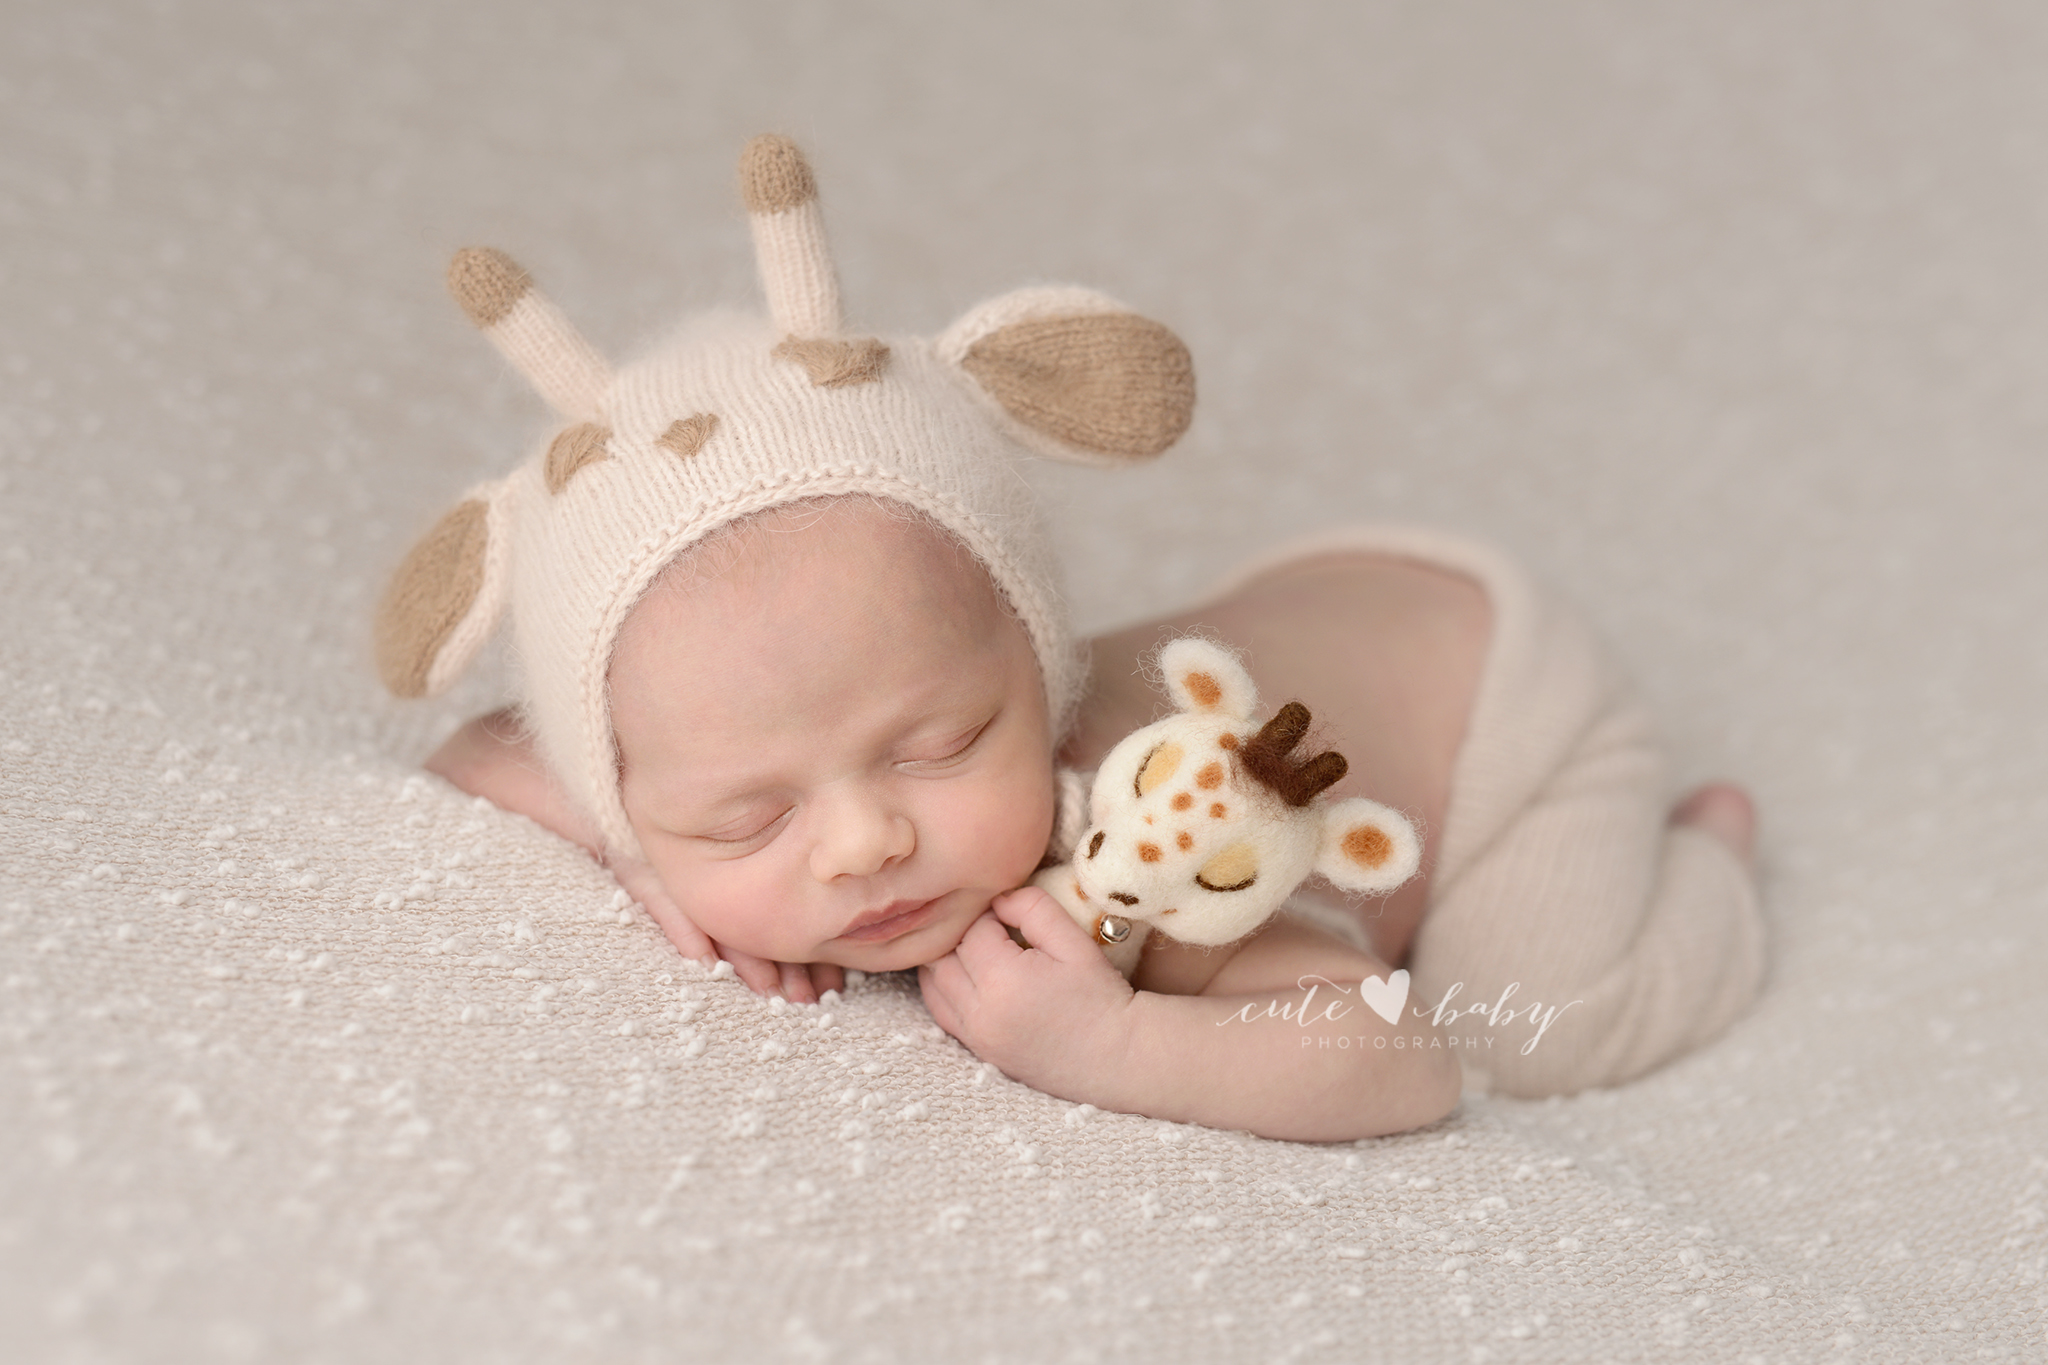 cute baby photography, Manchester newborn photography, newborn photography, best newborn photography manchester